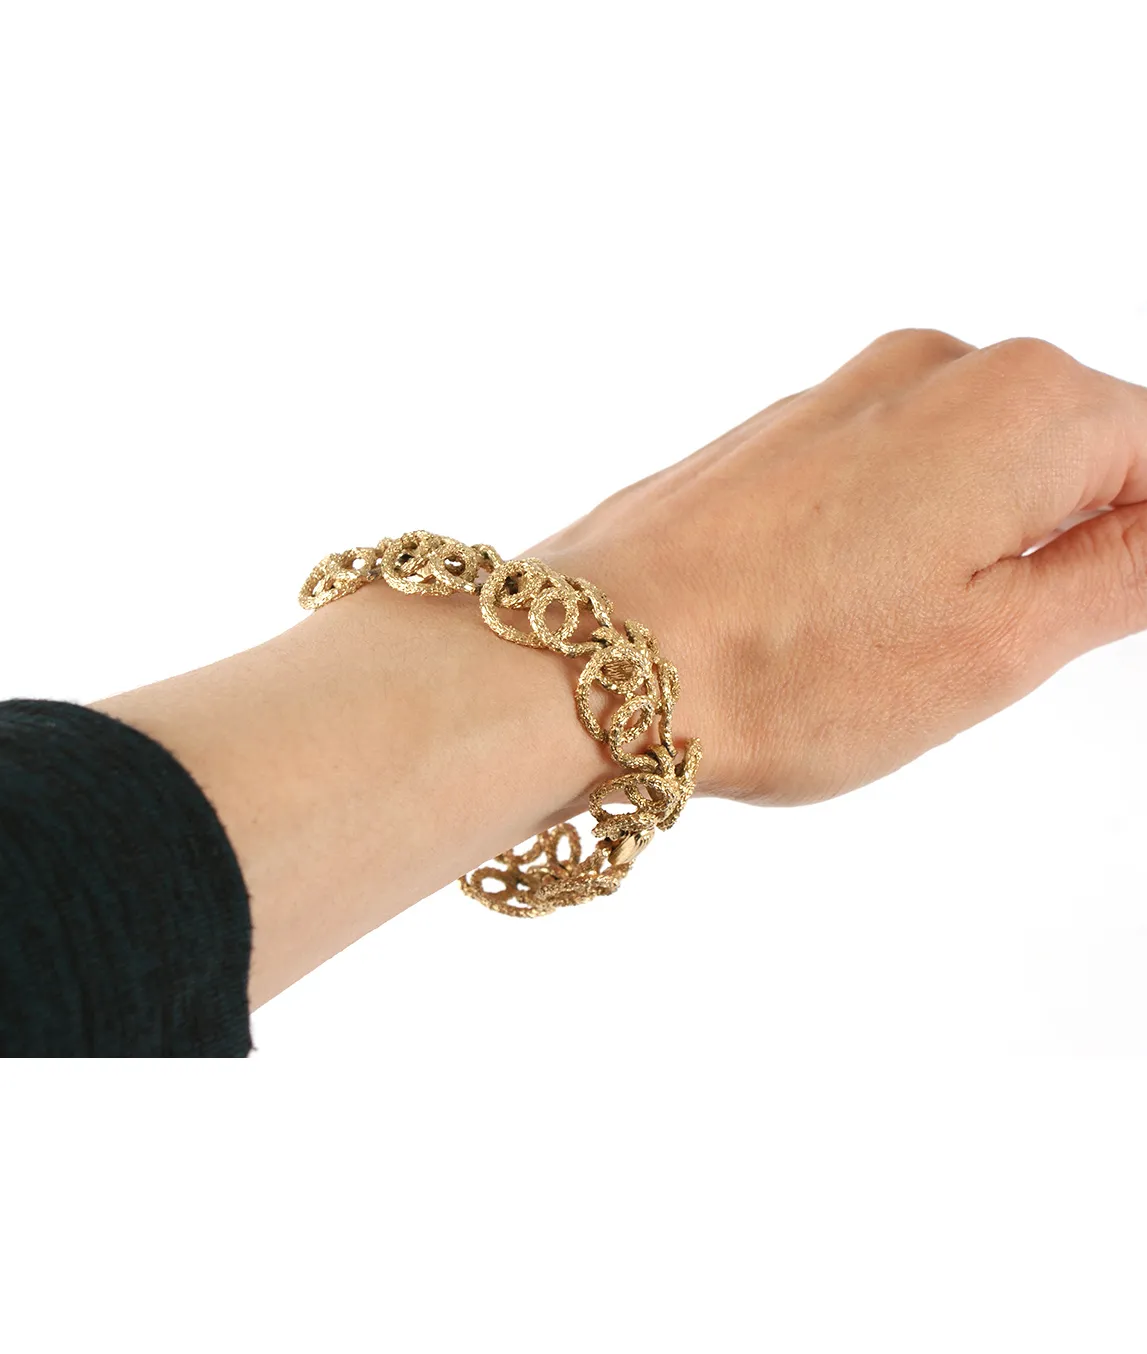 Trifari pretzel bracelet on the wrist